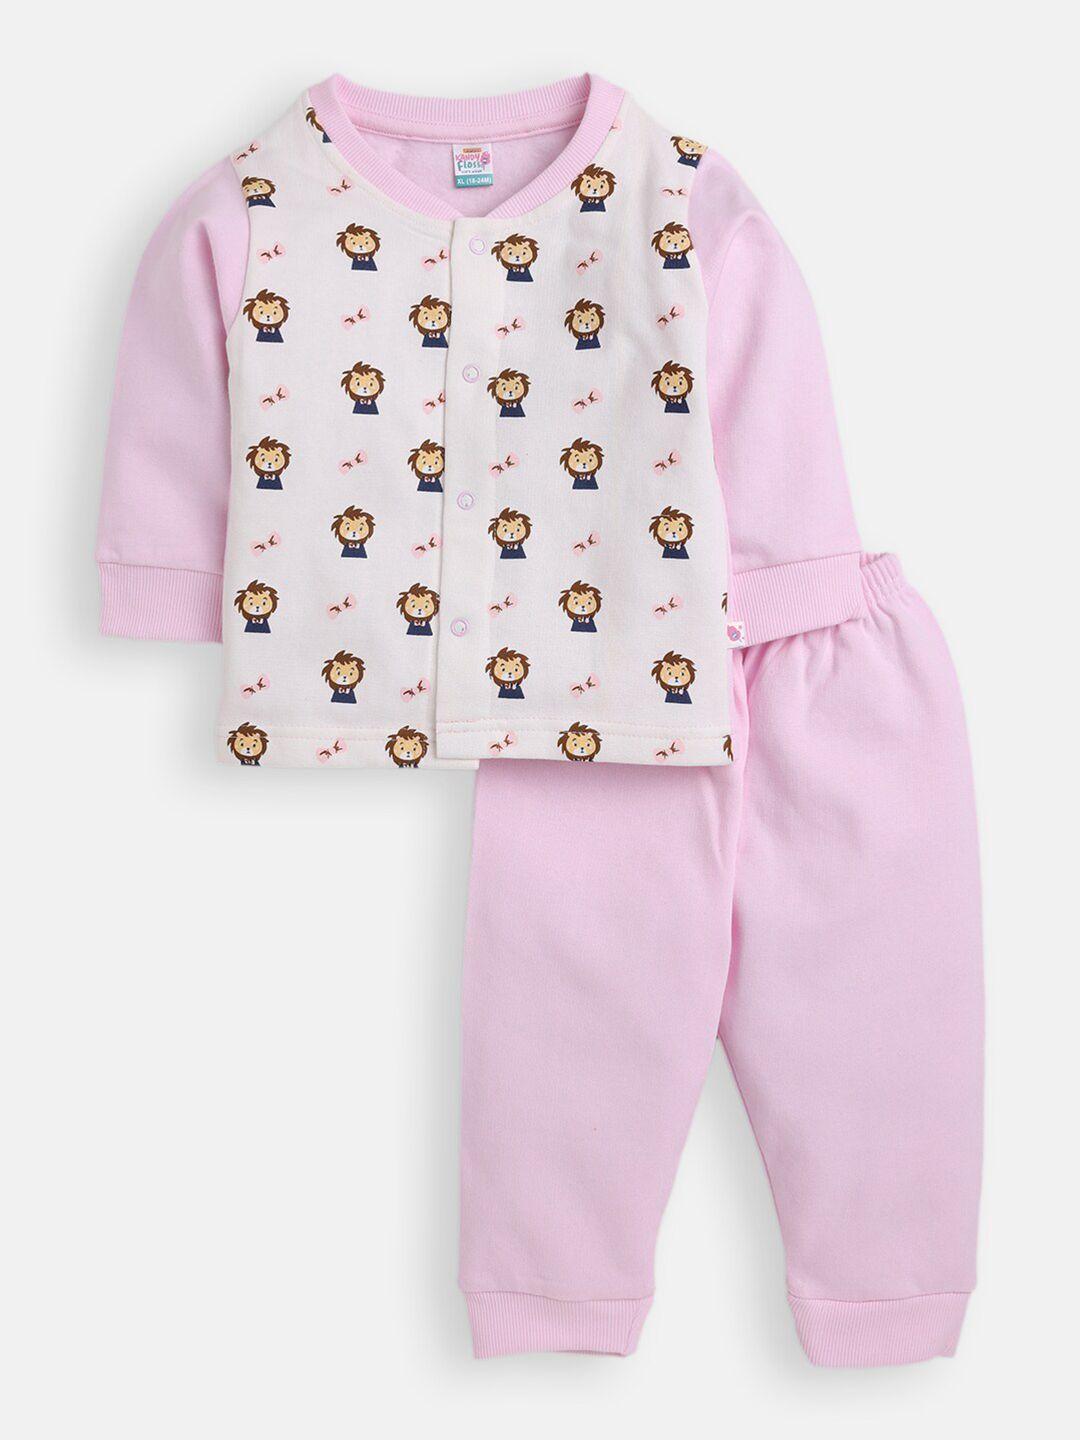 amul kandyfloss unisex kids pink & white printed t-shirt with pyjamas